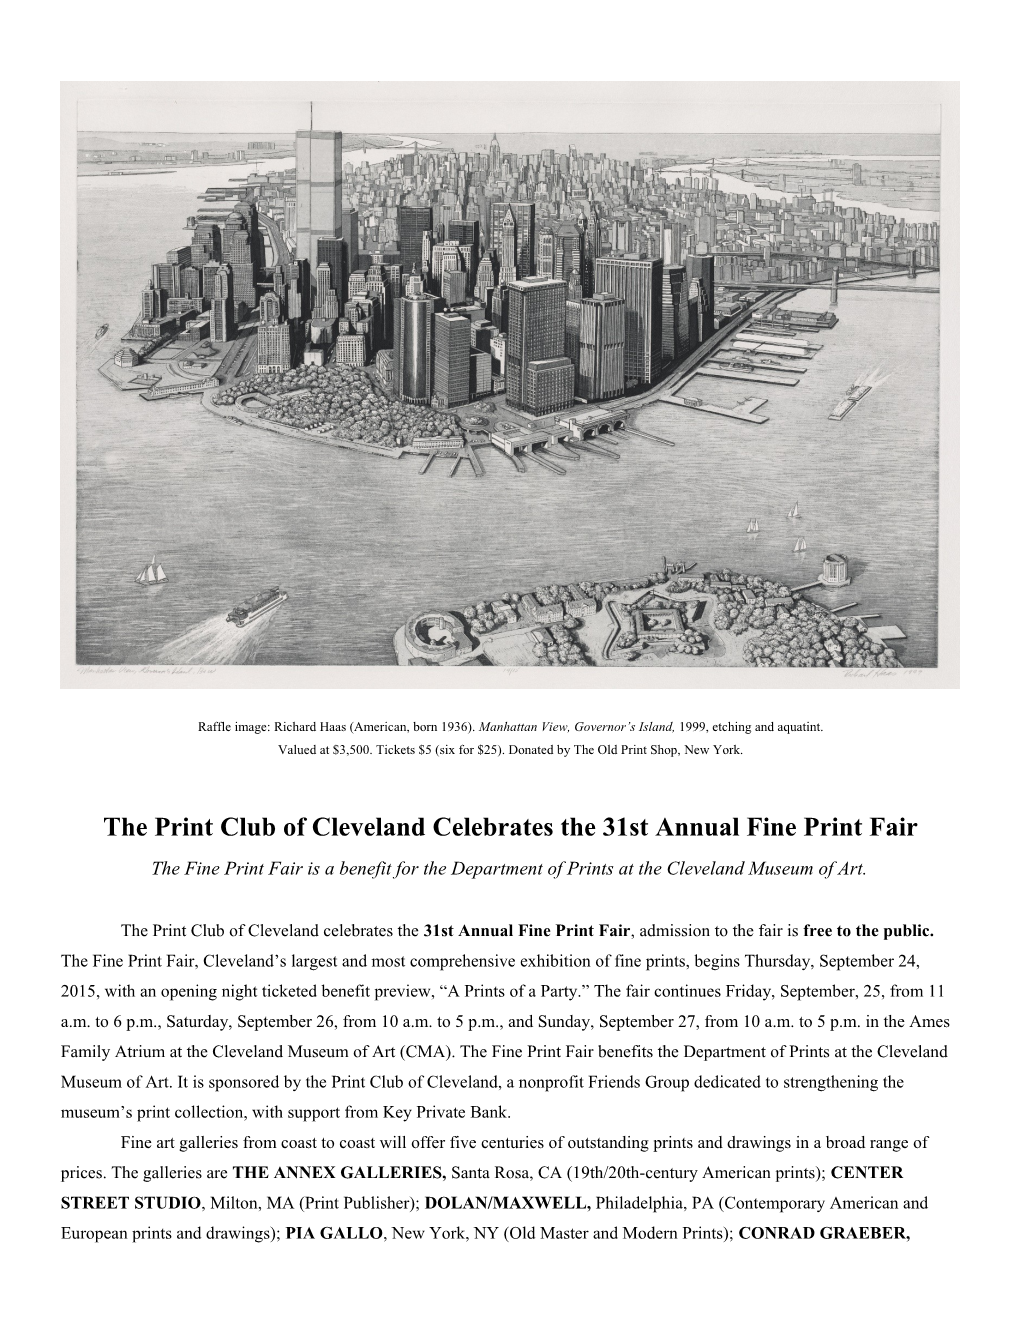 The Print Club of Cleveland Celebrates the 31St Annual Fine Print Fair